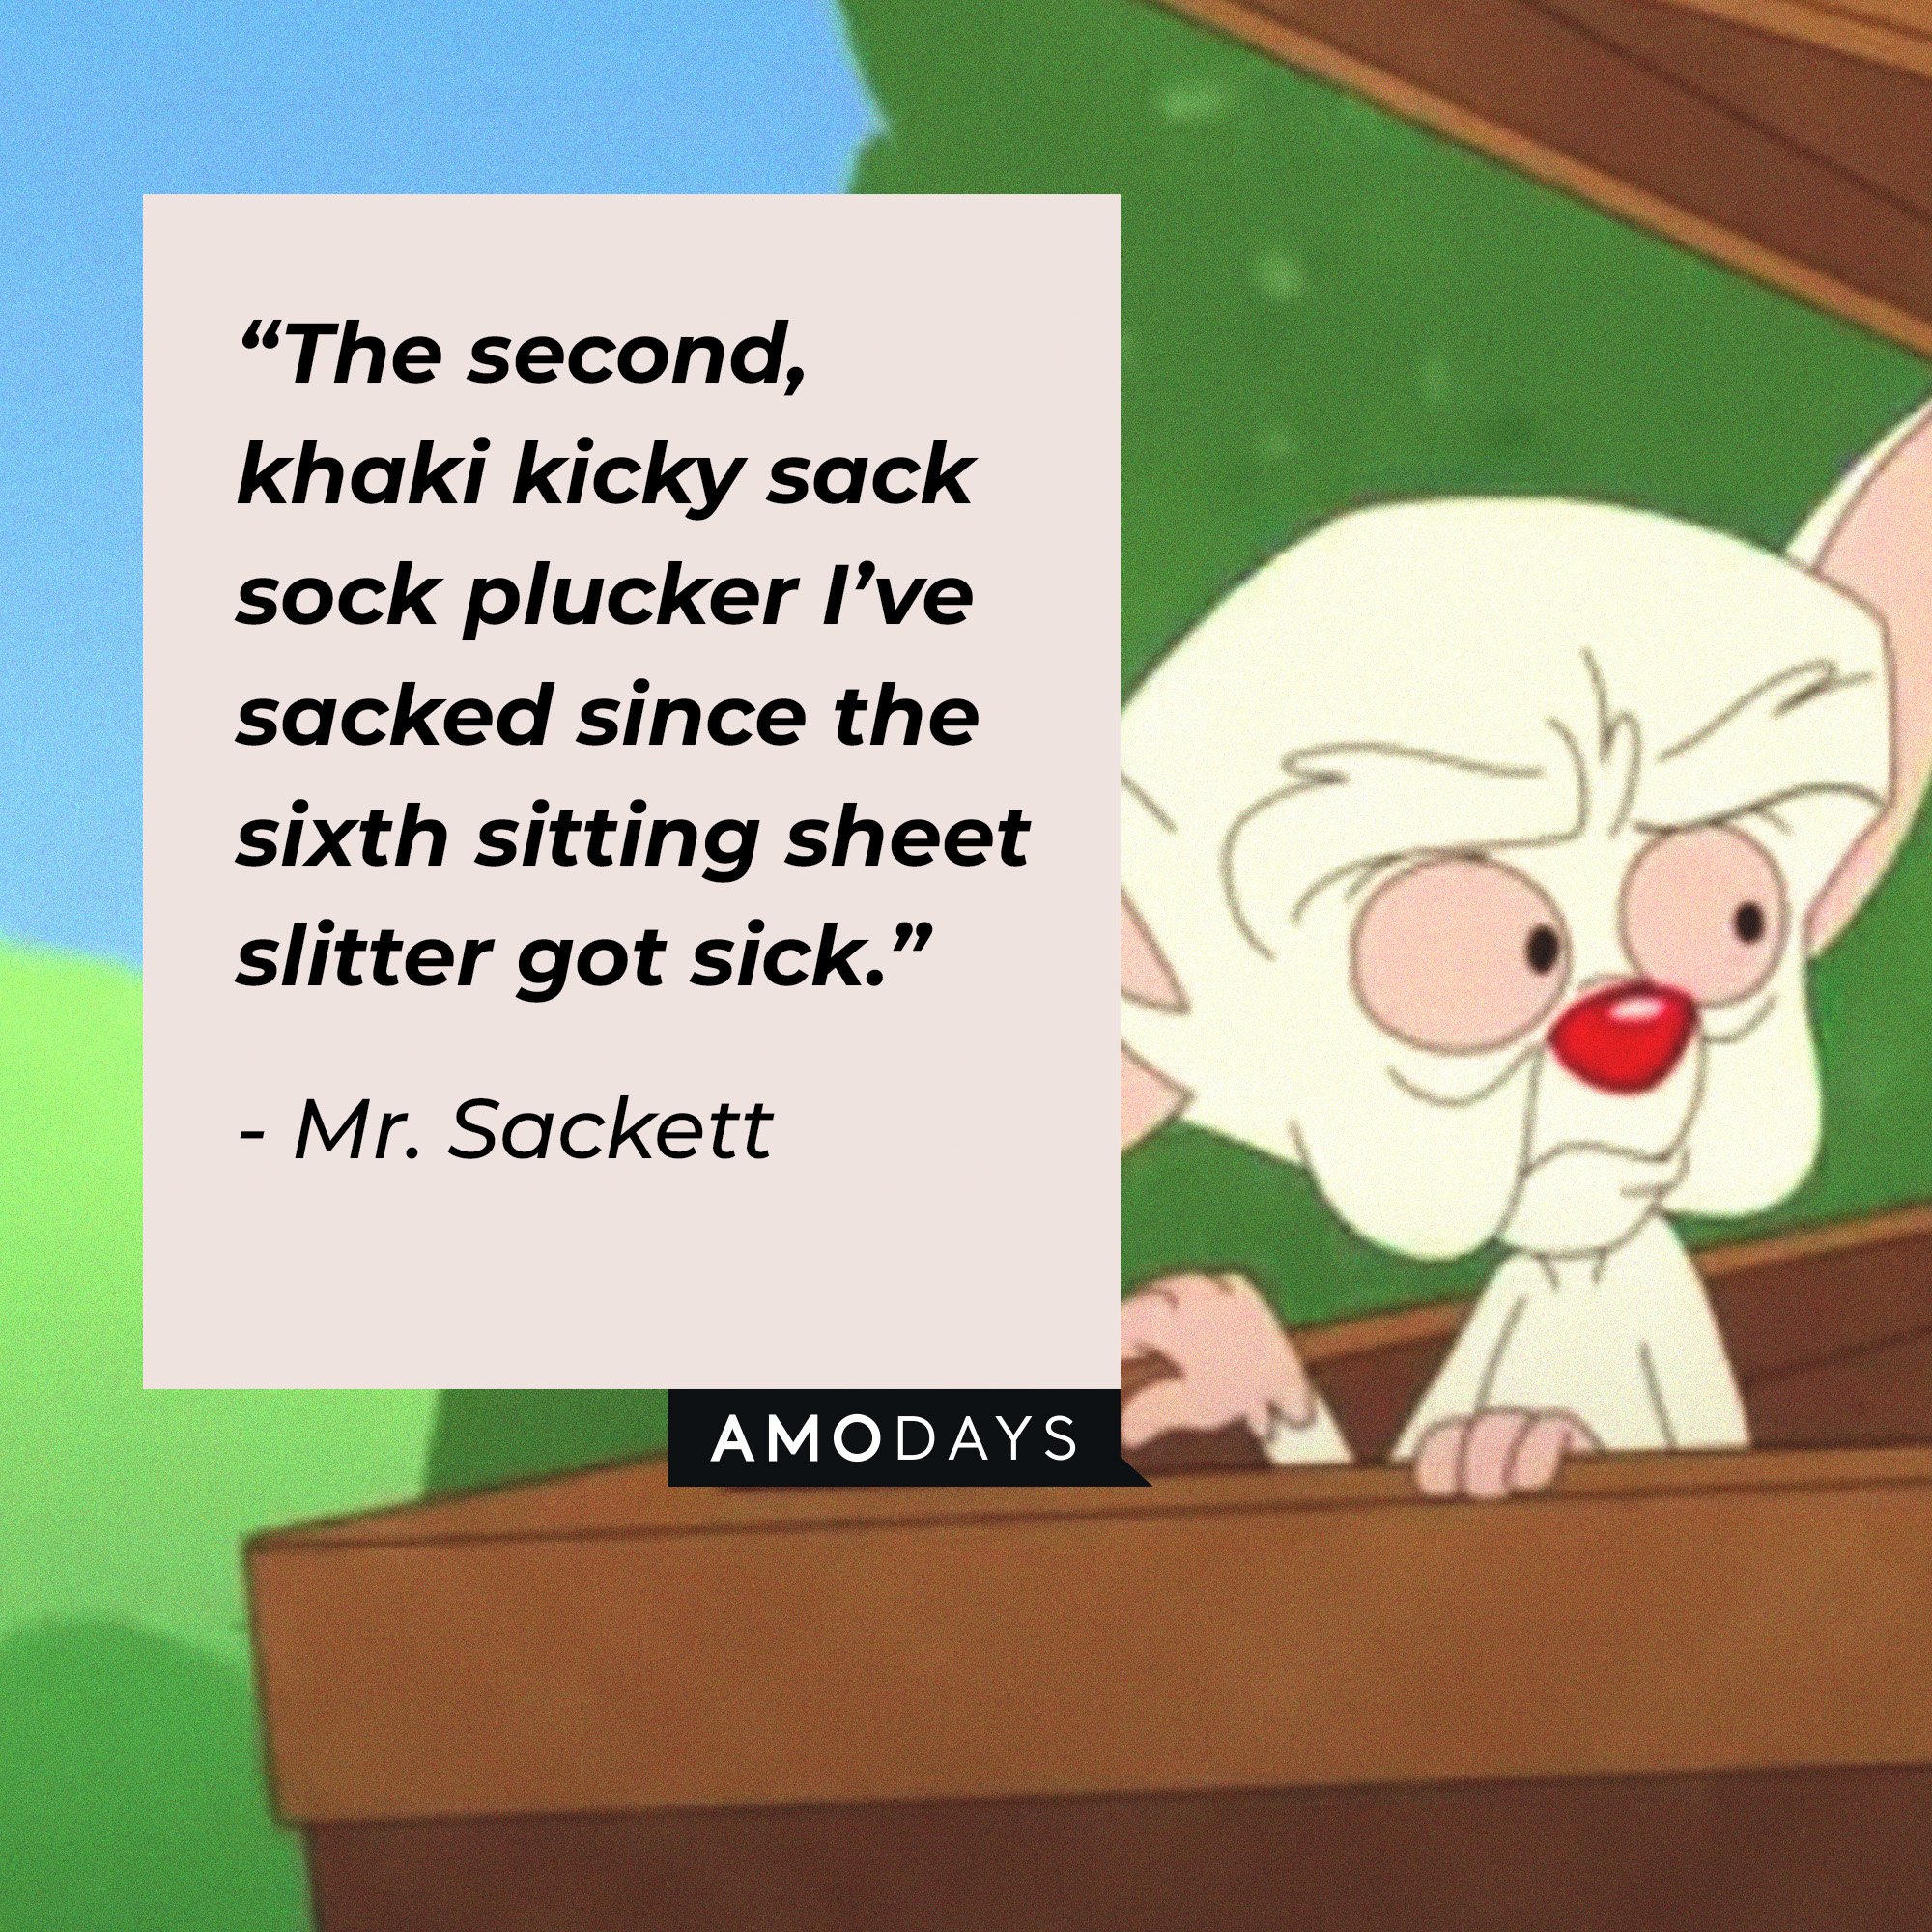 Mr. Sackett's quote: “The second, khaki kicky sack sock plucker I’ve sacked since the sixth sitting sheet slitter got sick.” | Image; AmoDays